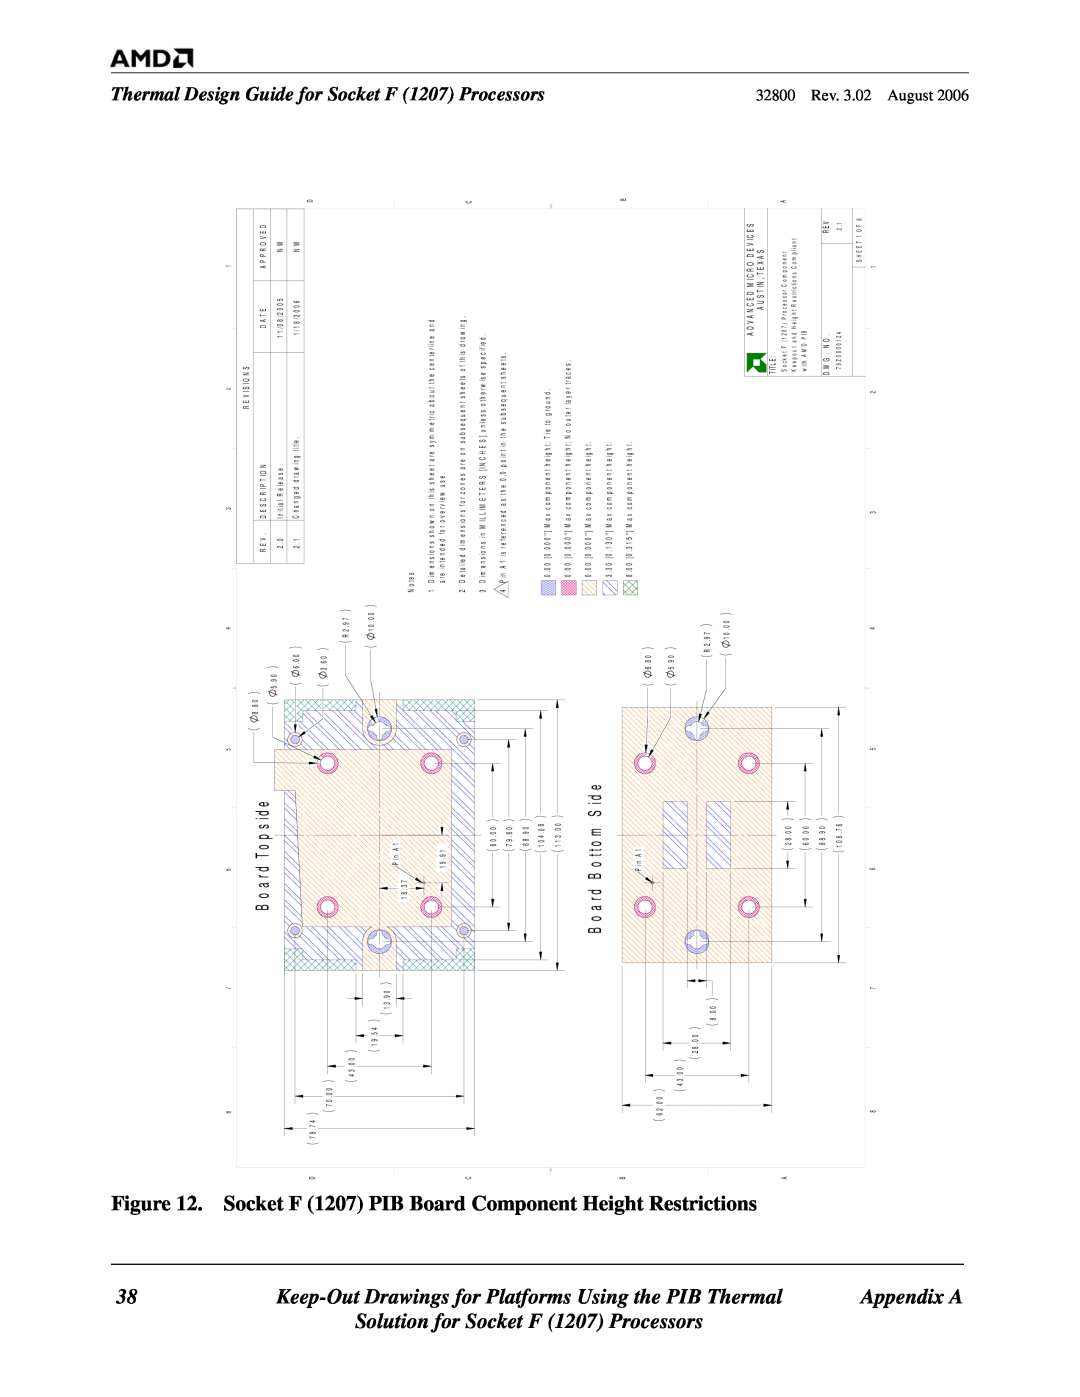 AMD manual Socket F 1207 PIB Board Component Height Restrictions, Appendix A, A D V A N C E D M I C R O D E V I C E S 